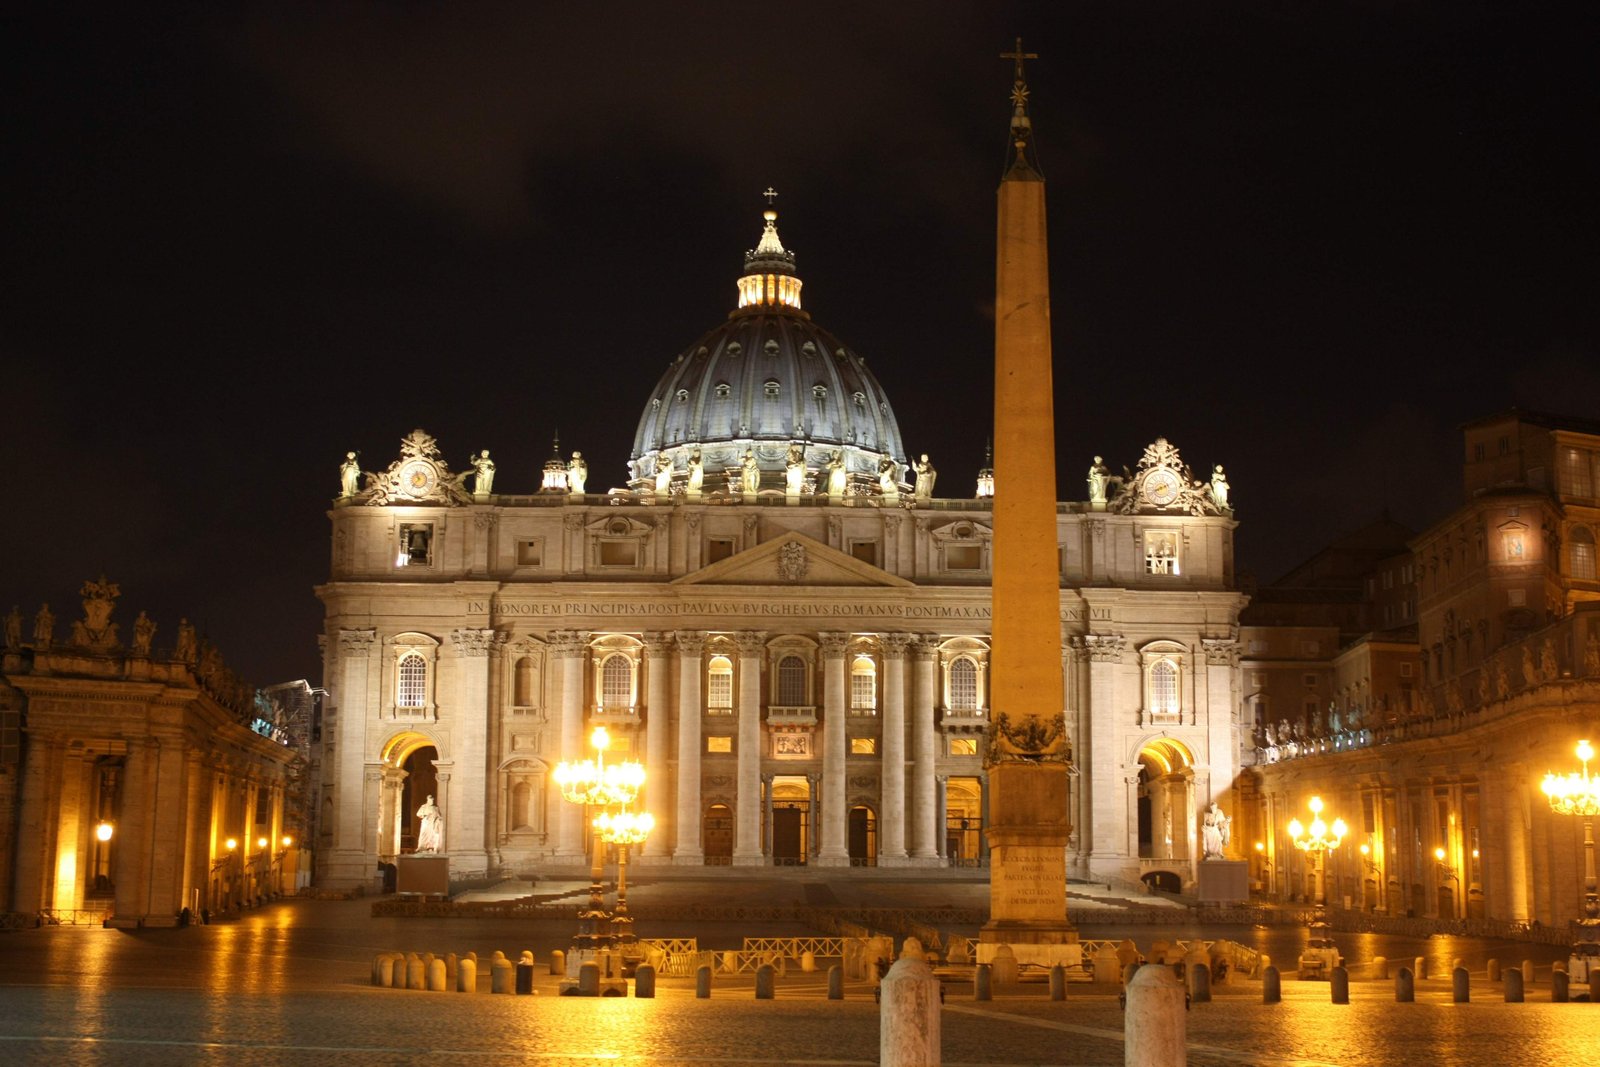 St. Peter's Basilica at Night